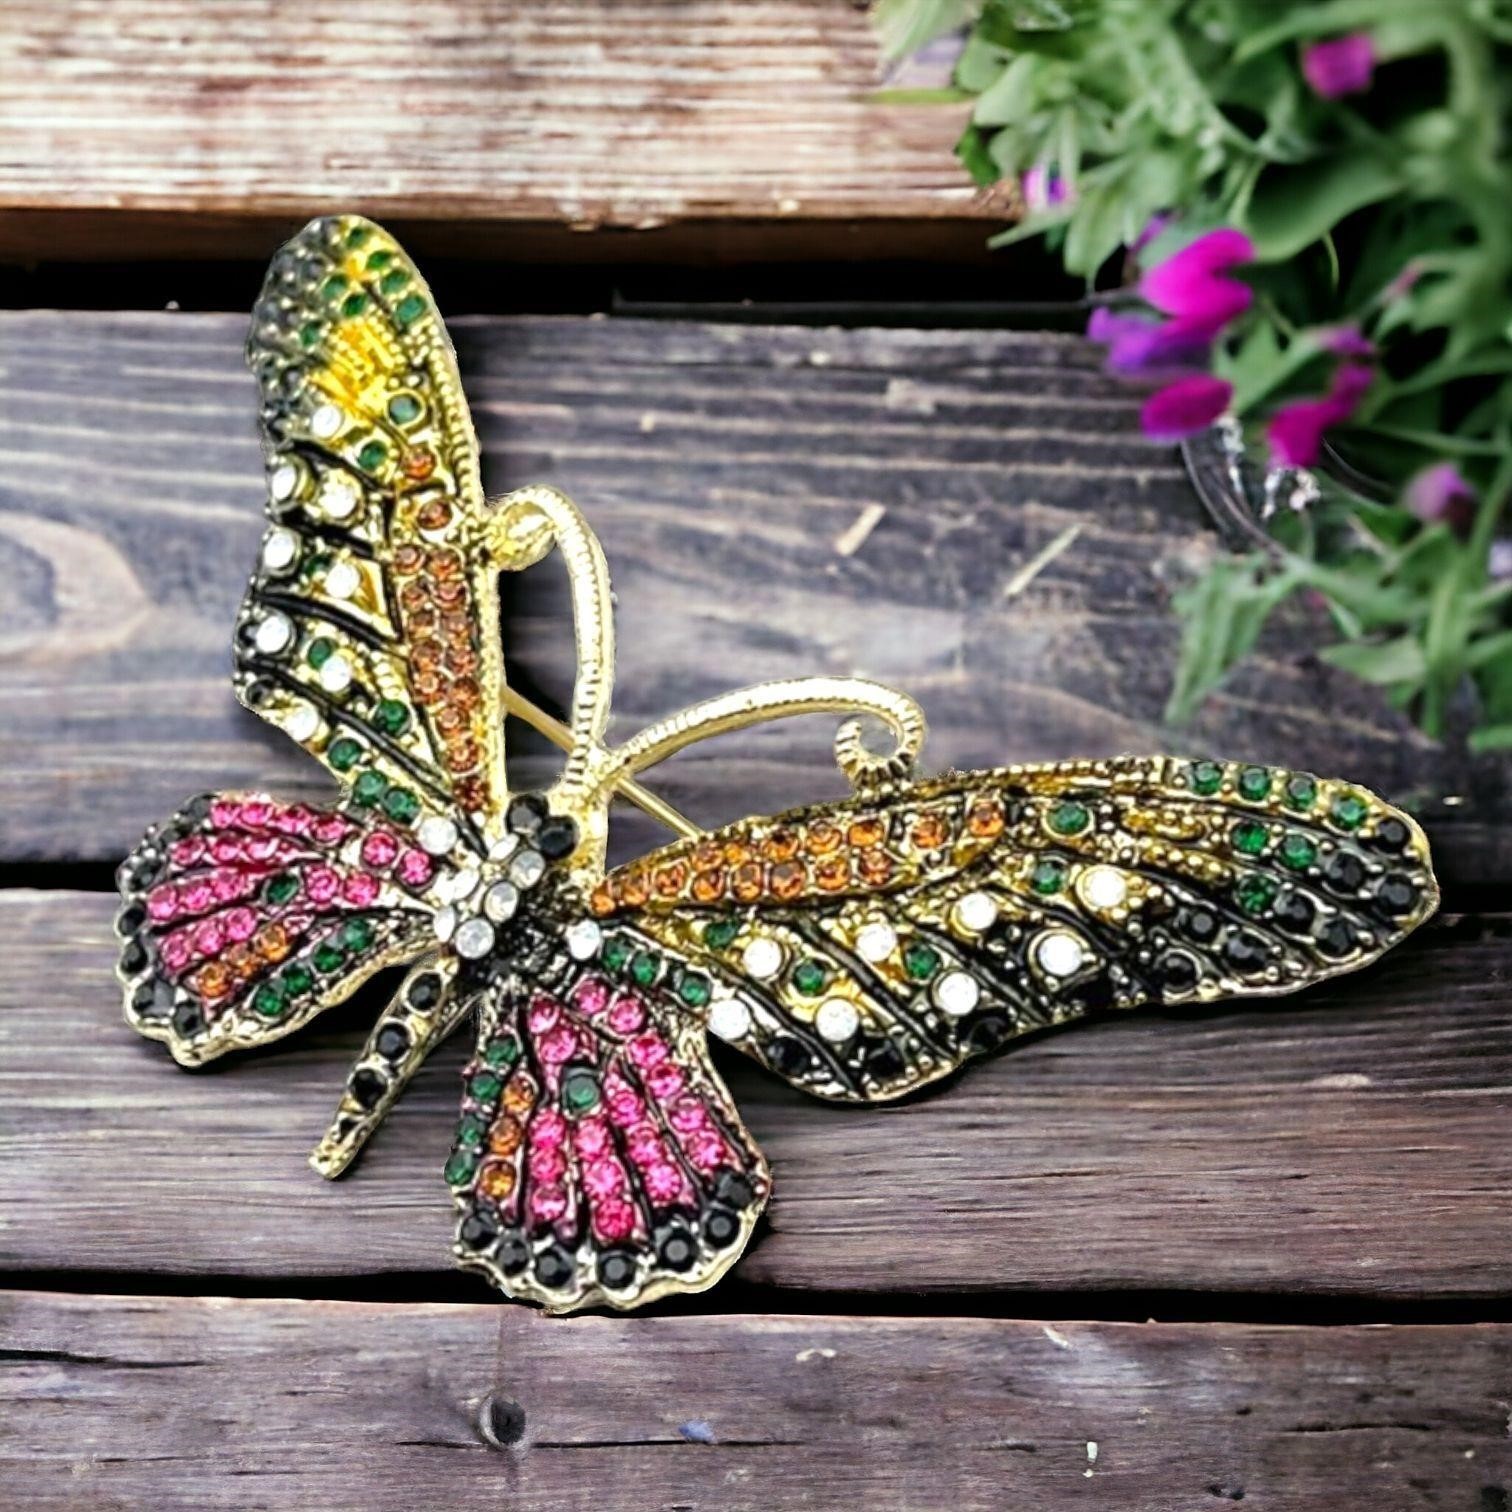 Vivid Multi Color Flying Butterfly Brooch Pin